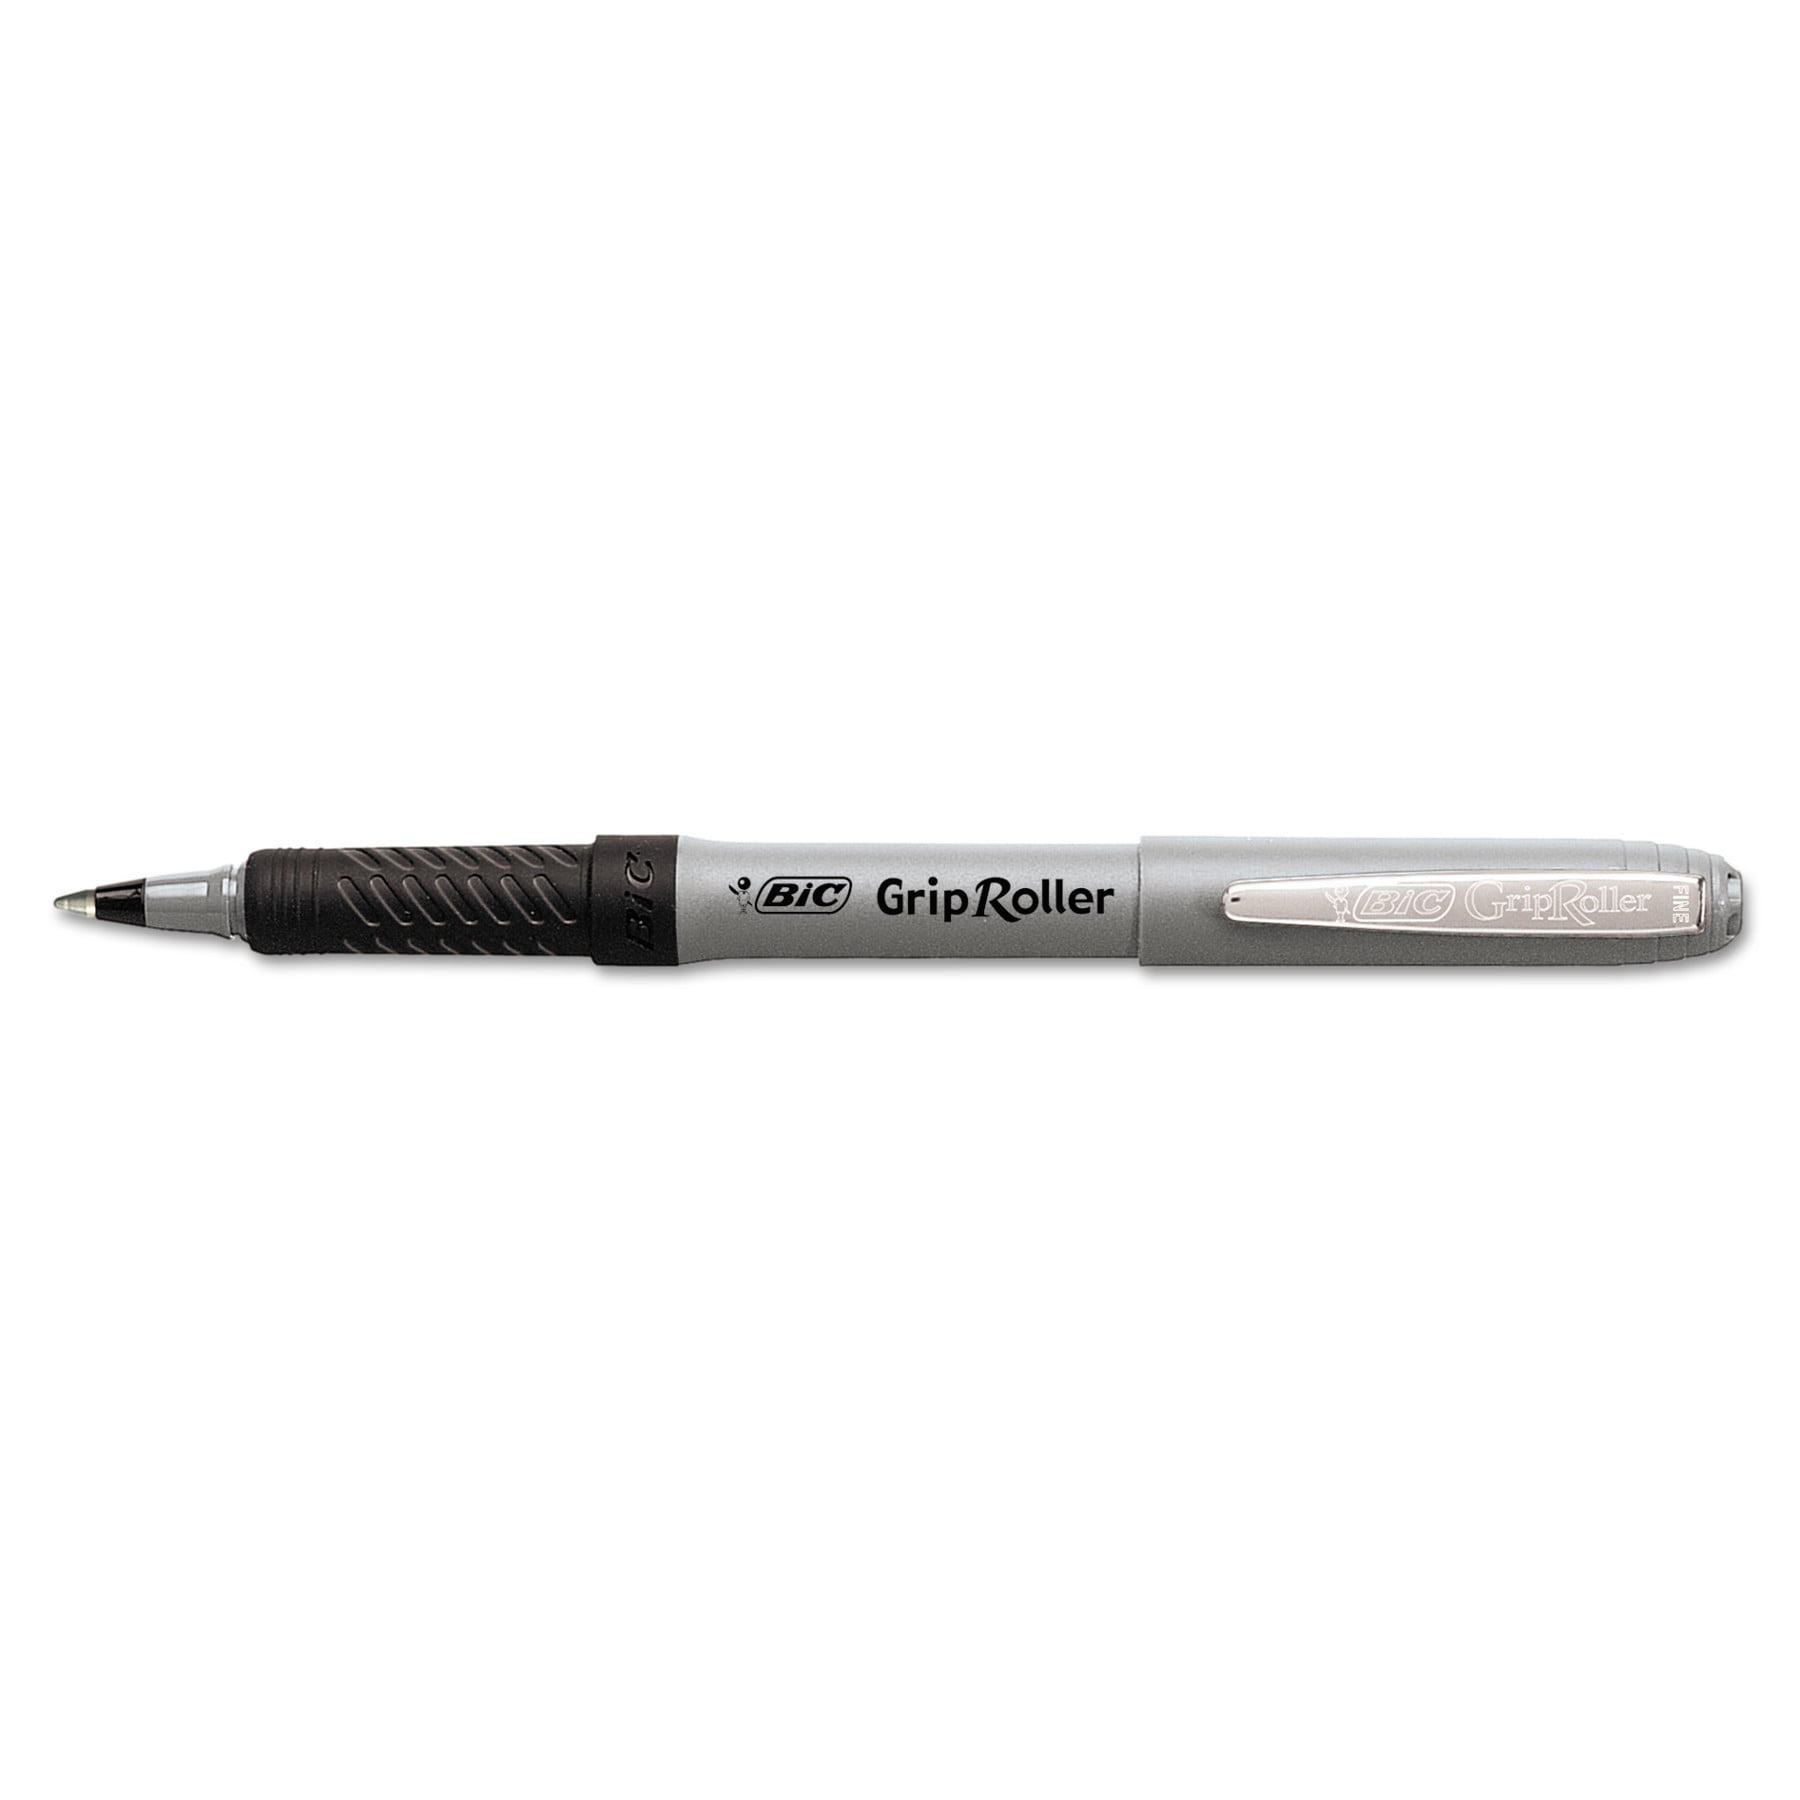 BALL Pens 0.7mm Fine BLACK Ultra-Glide Smooth Ballpoint Pens School Office Pack